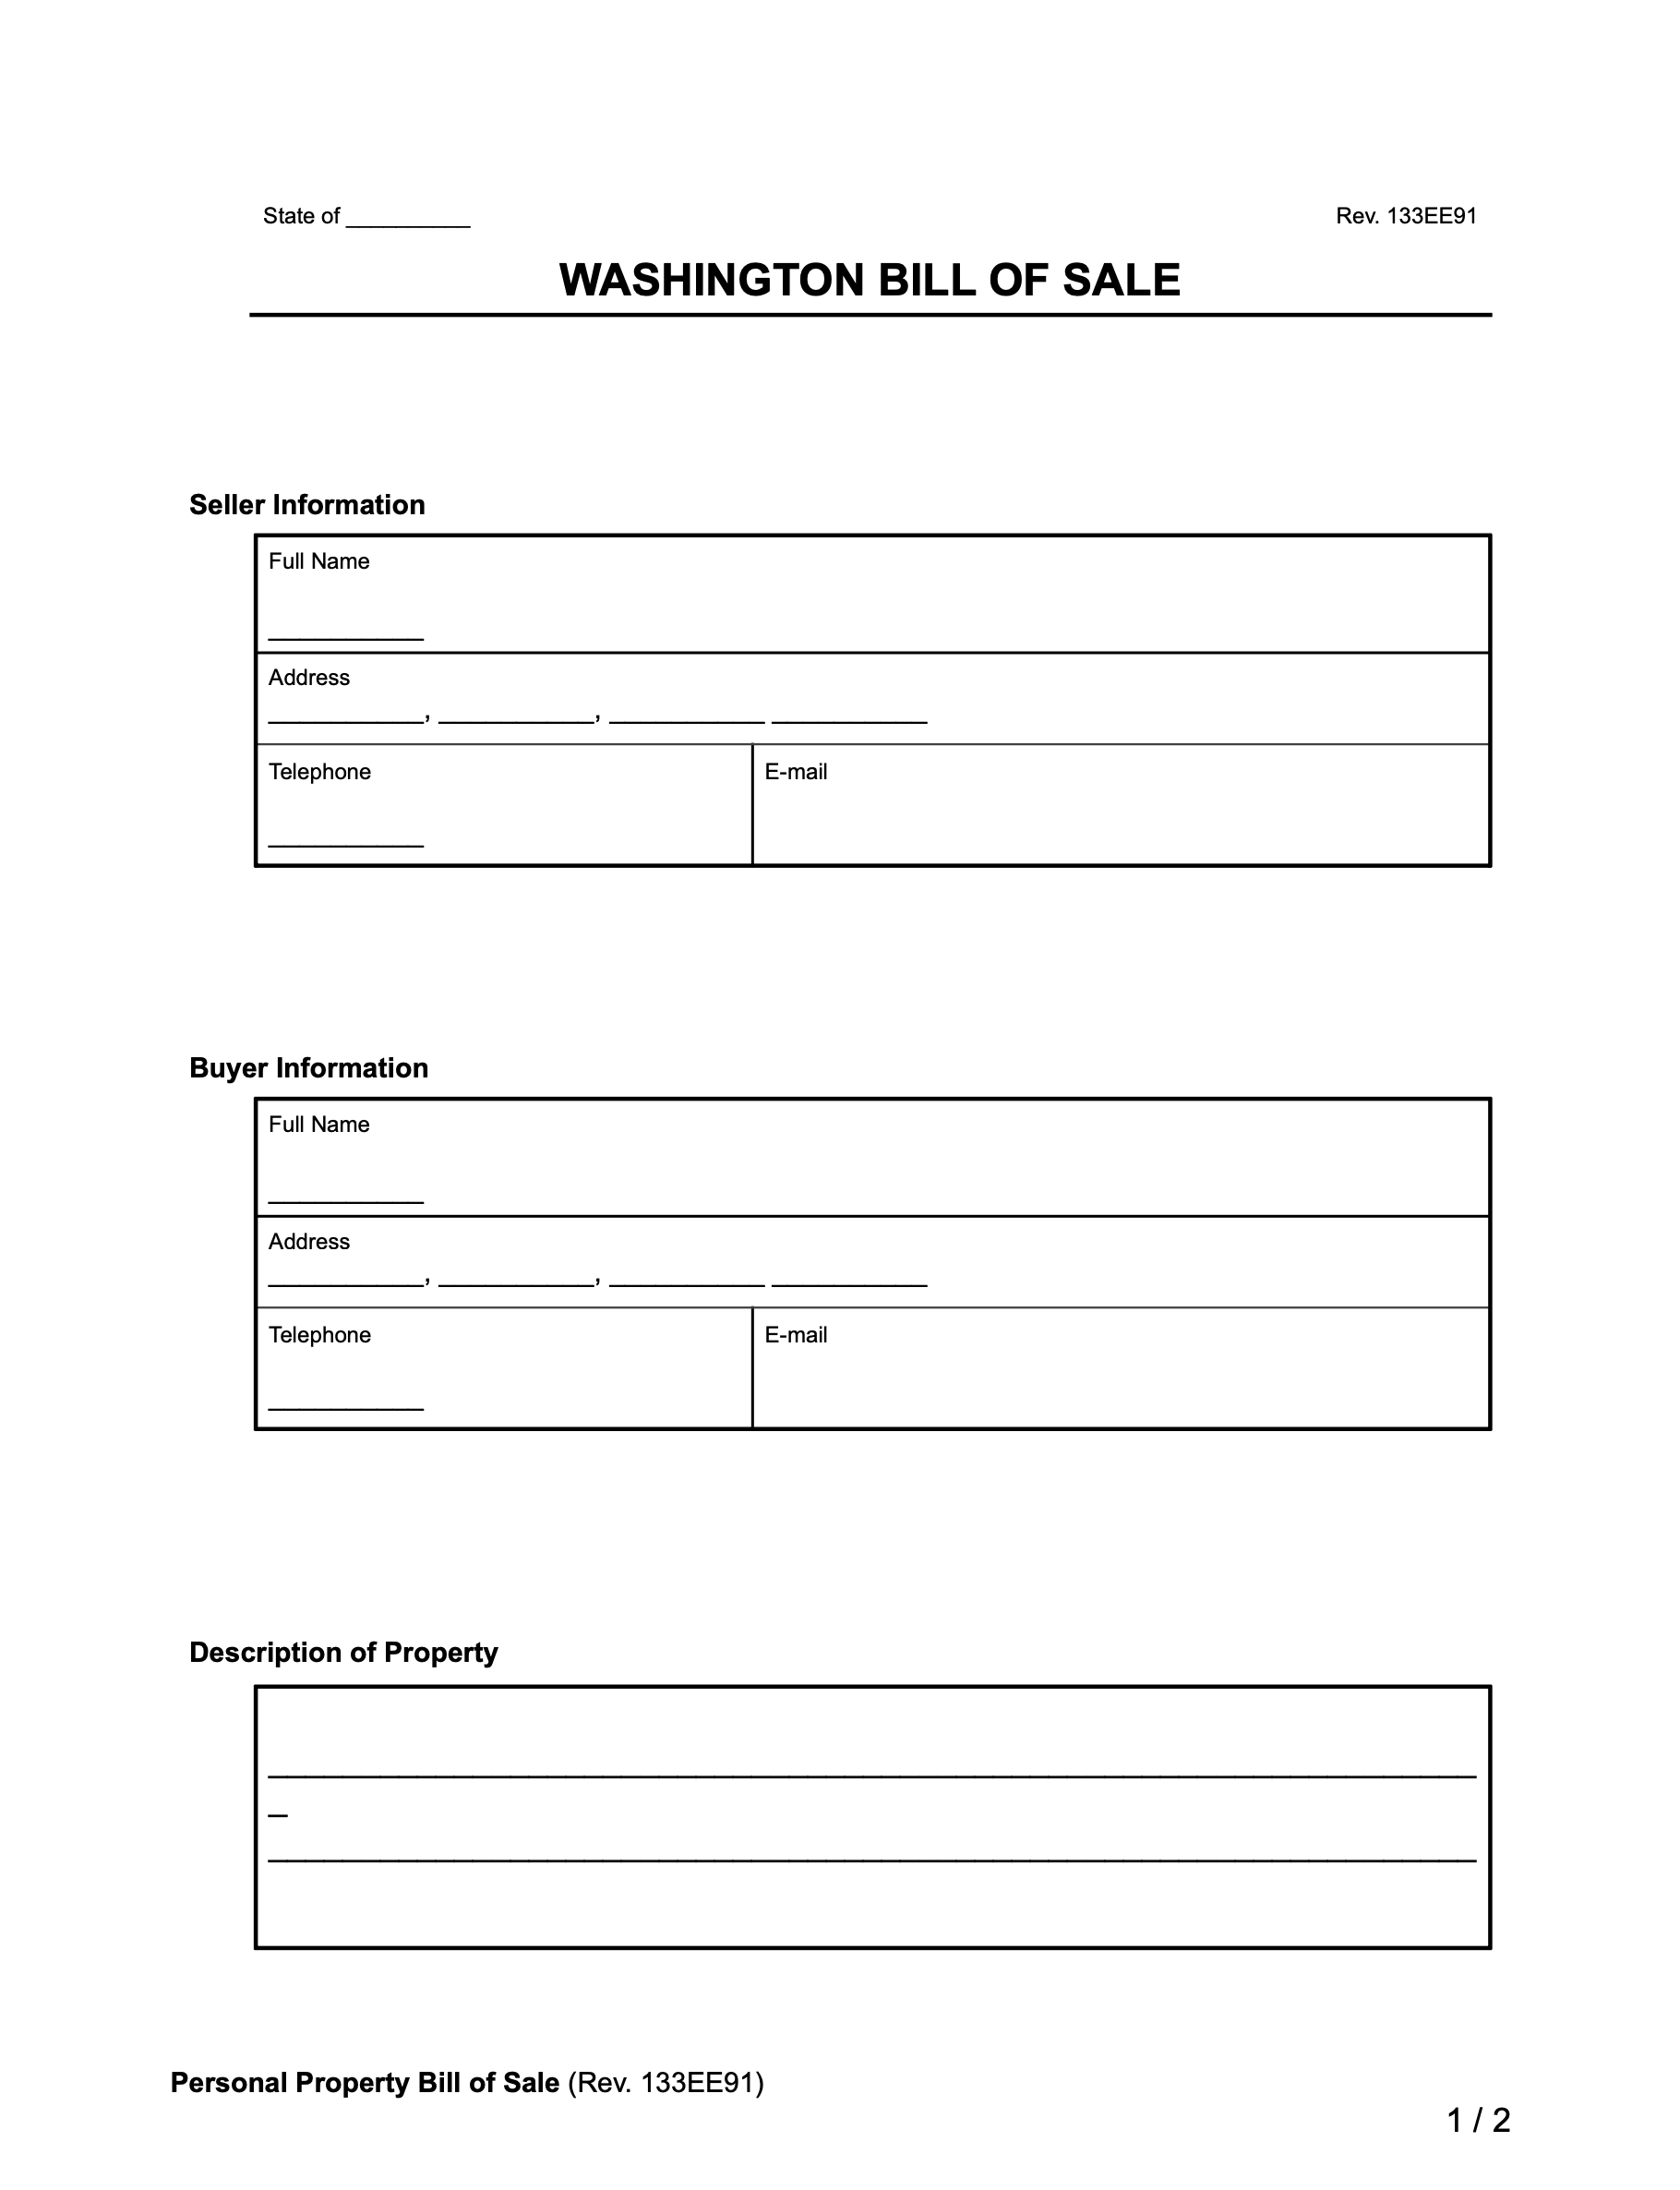 washington bill of sale sample